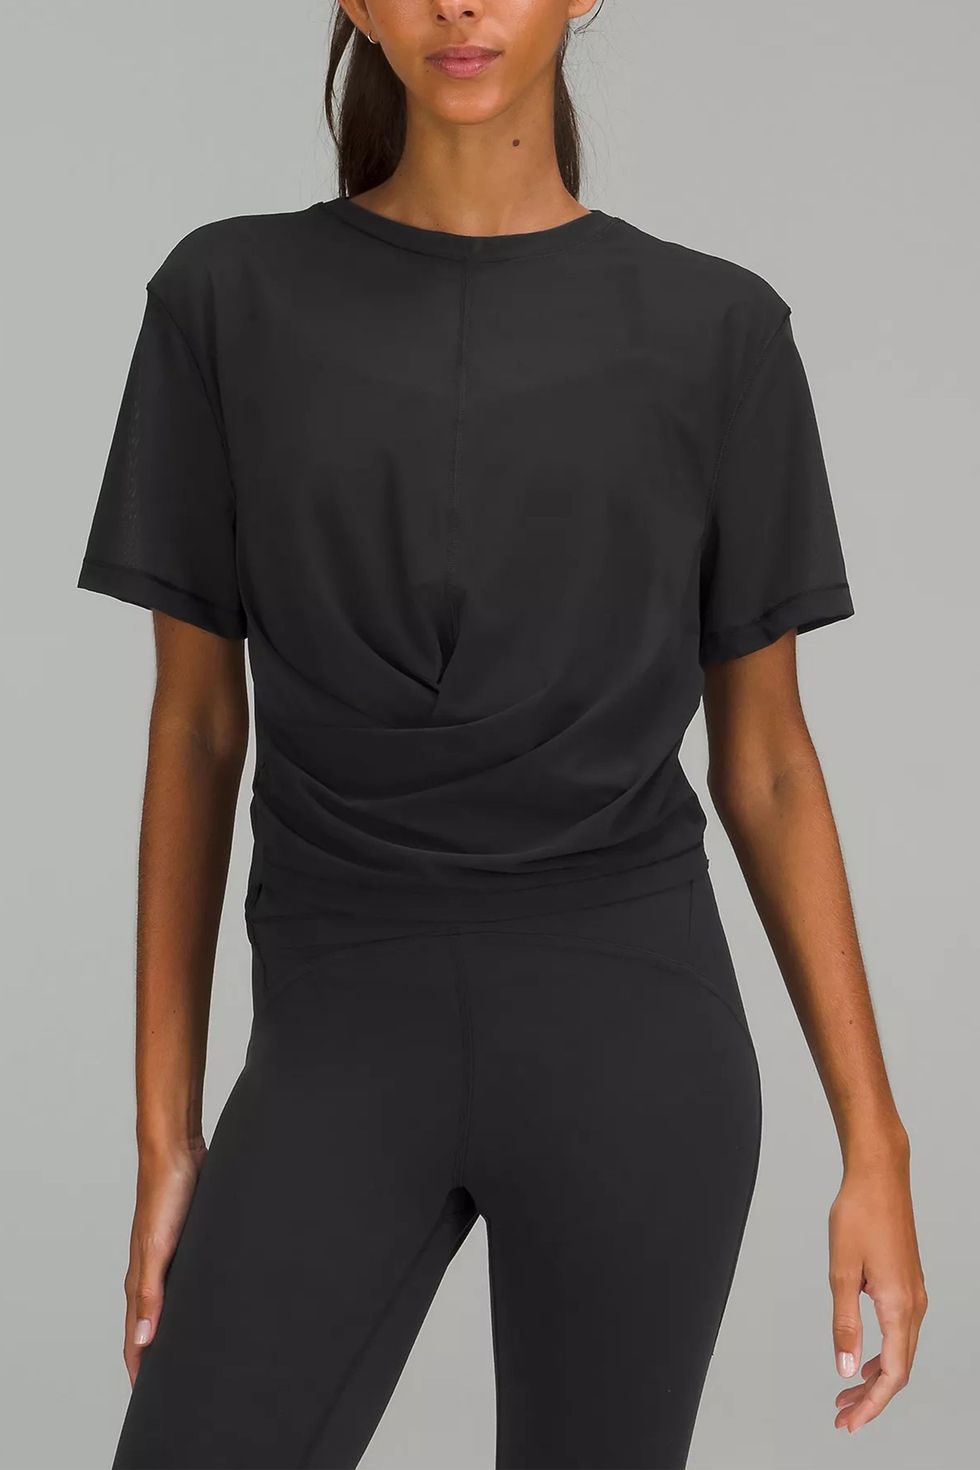 New Lululemon Crescent T-Shirt Short Sleeve Tee Top Size 2 Rover